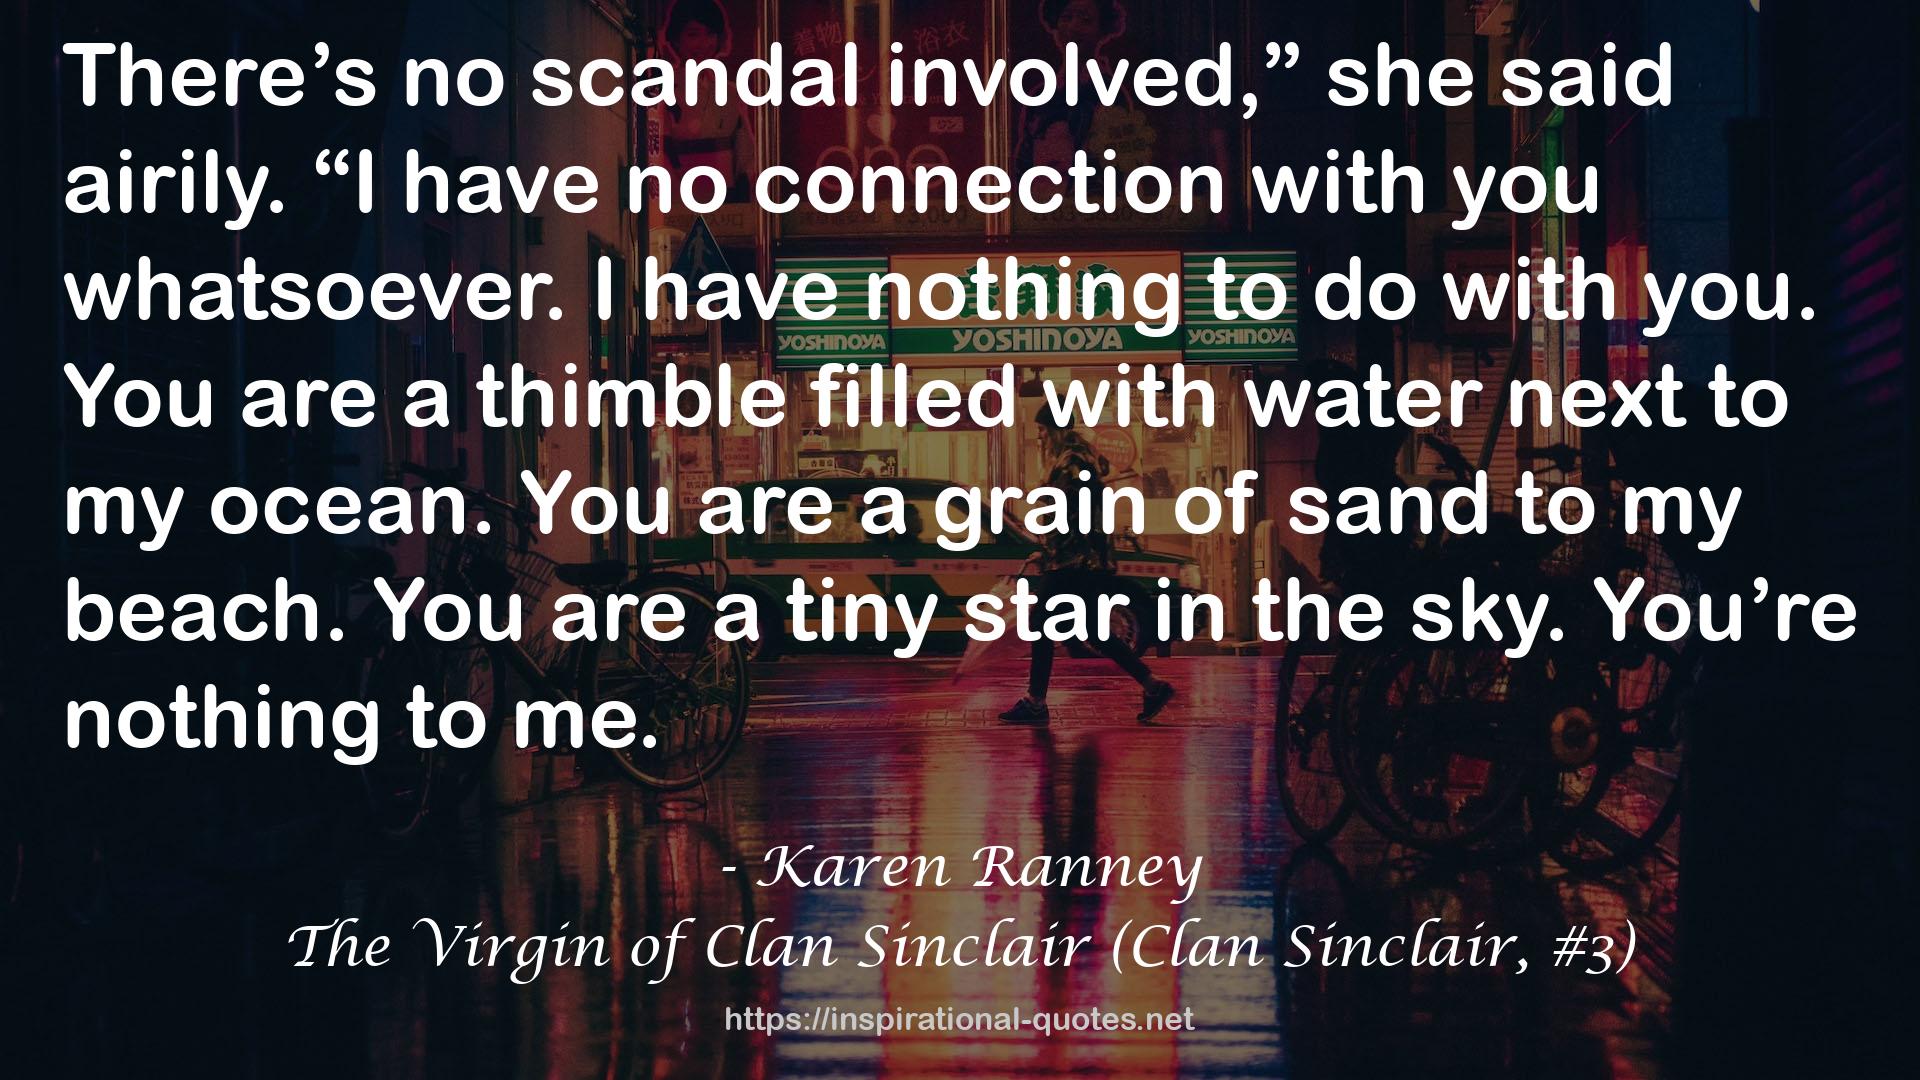 The Virgin of Clan Sinclair (Clan Sinclair, #3) QUOTES